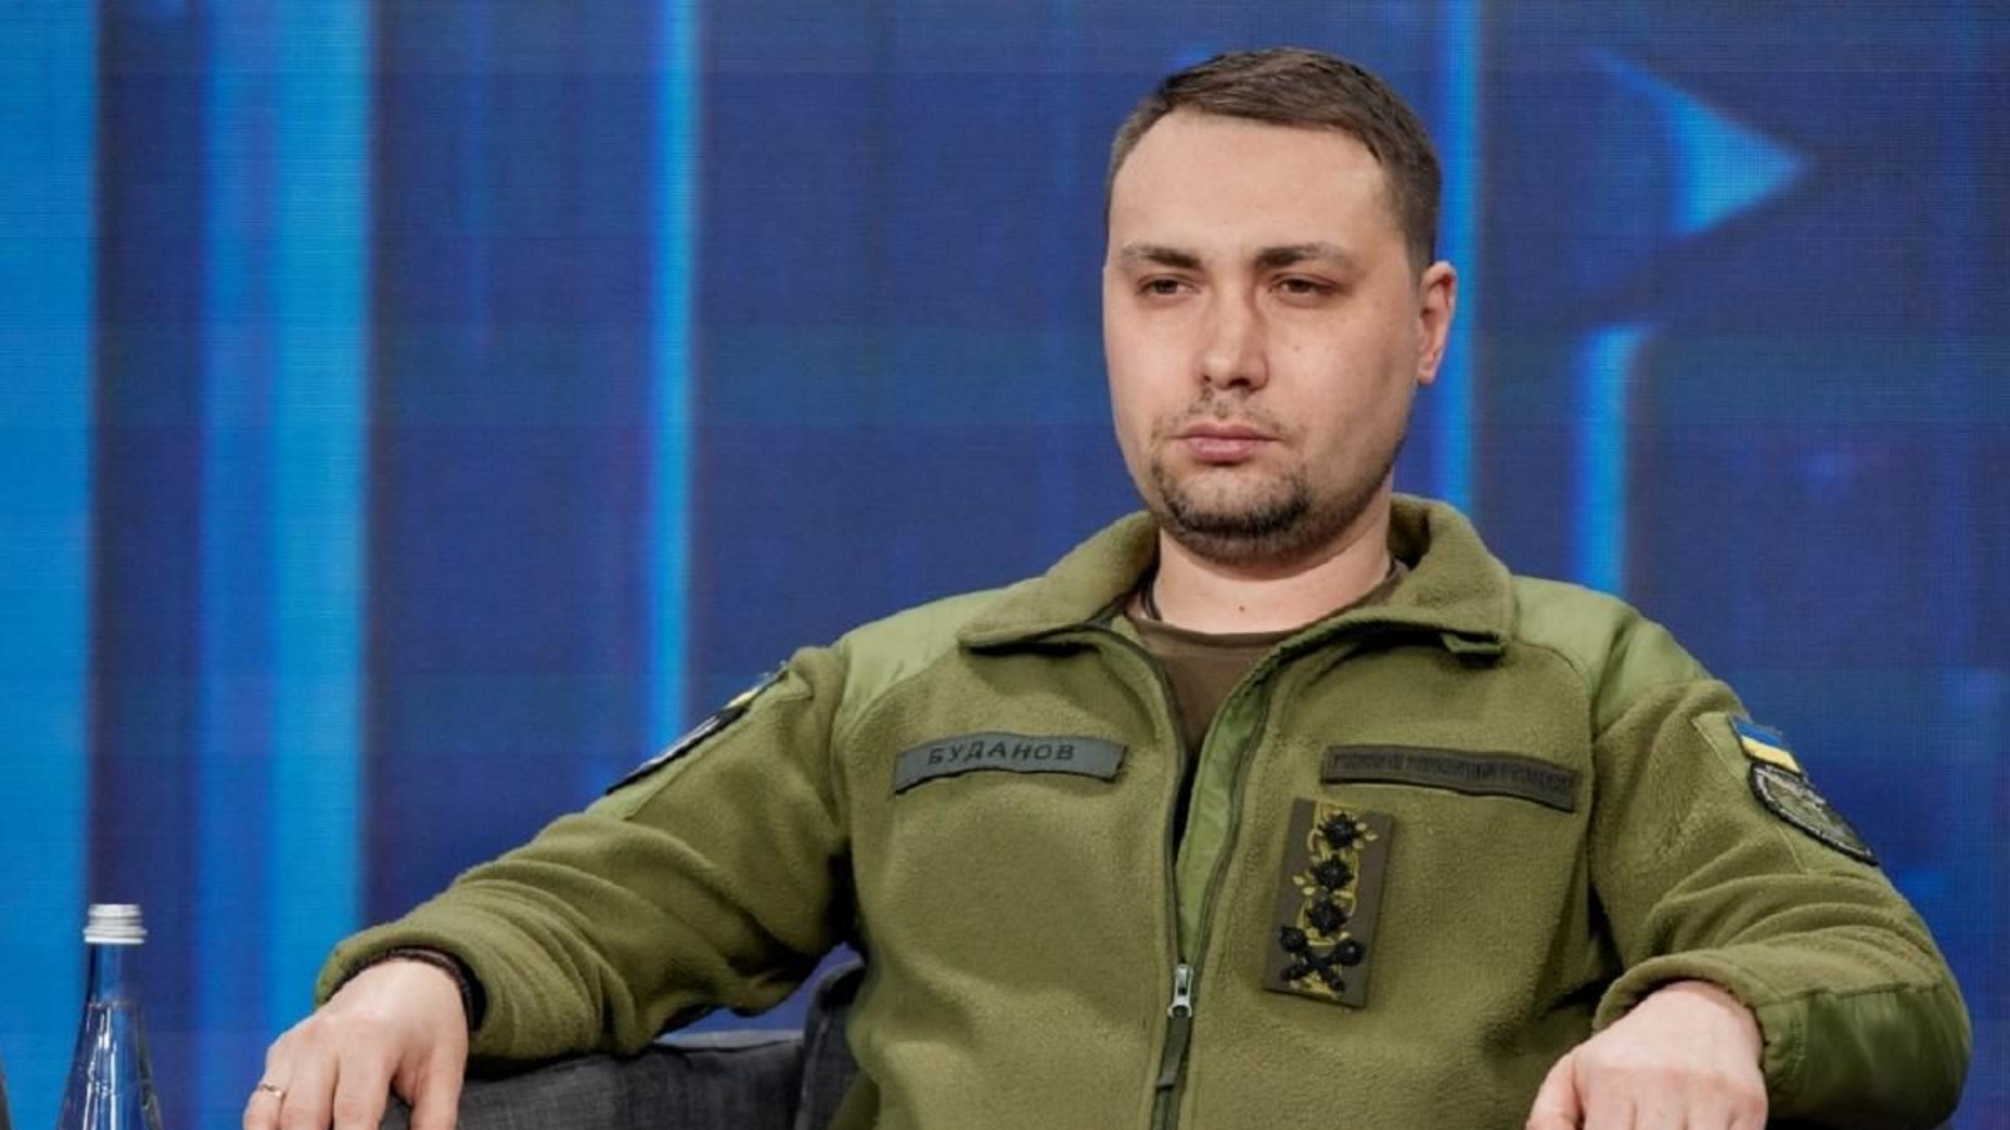 Руководитель ГУР Буданов следит за спецоперациями в режиме онлайн